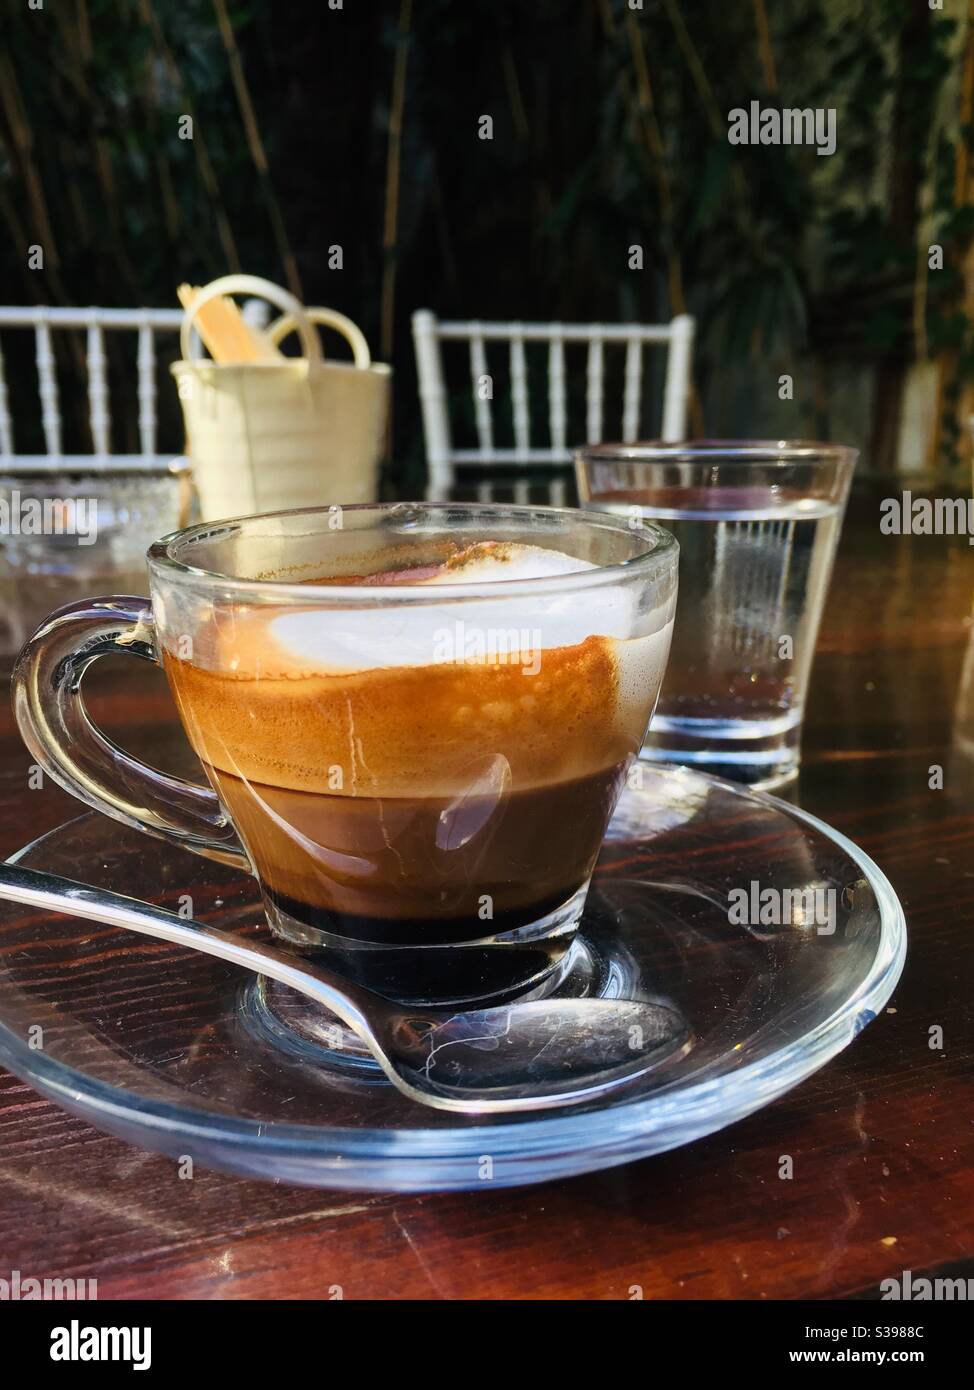 Italian breakfast with Italian coffee Stock Photo